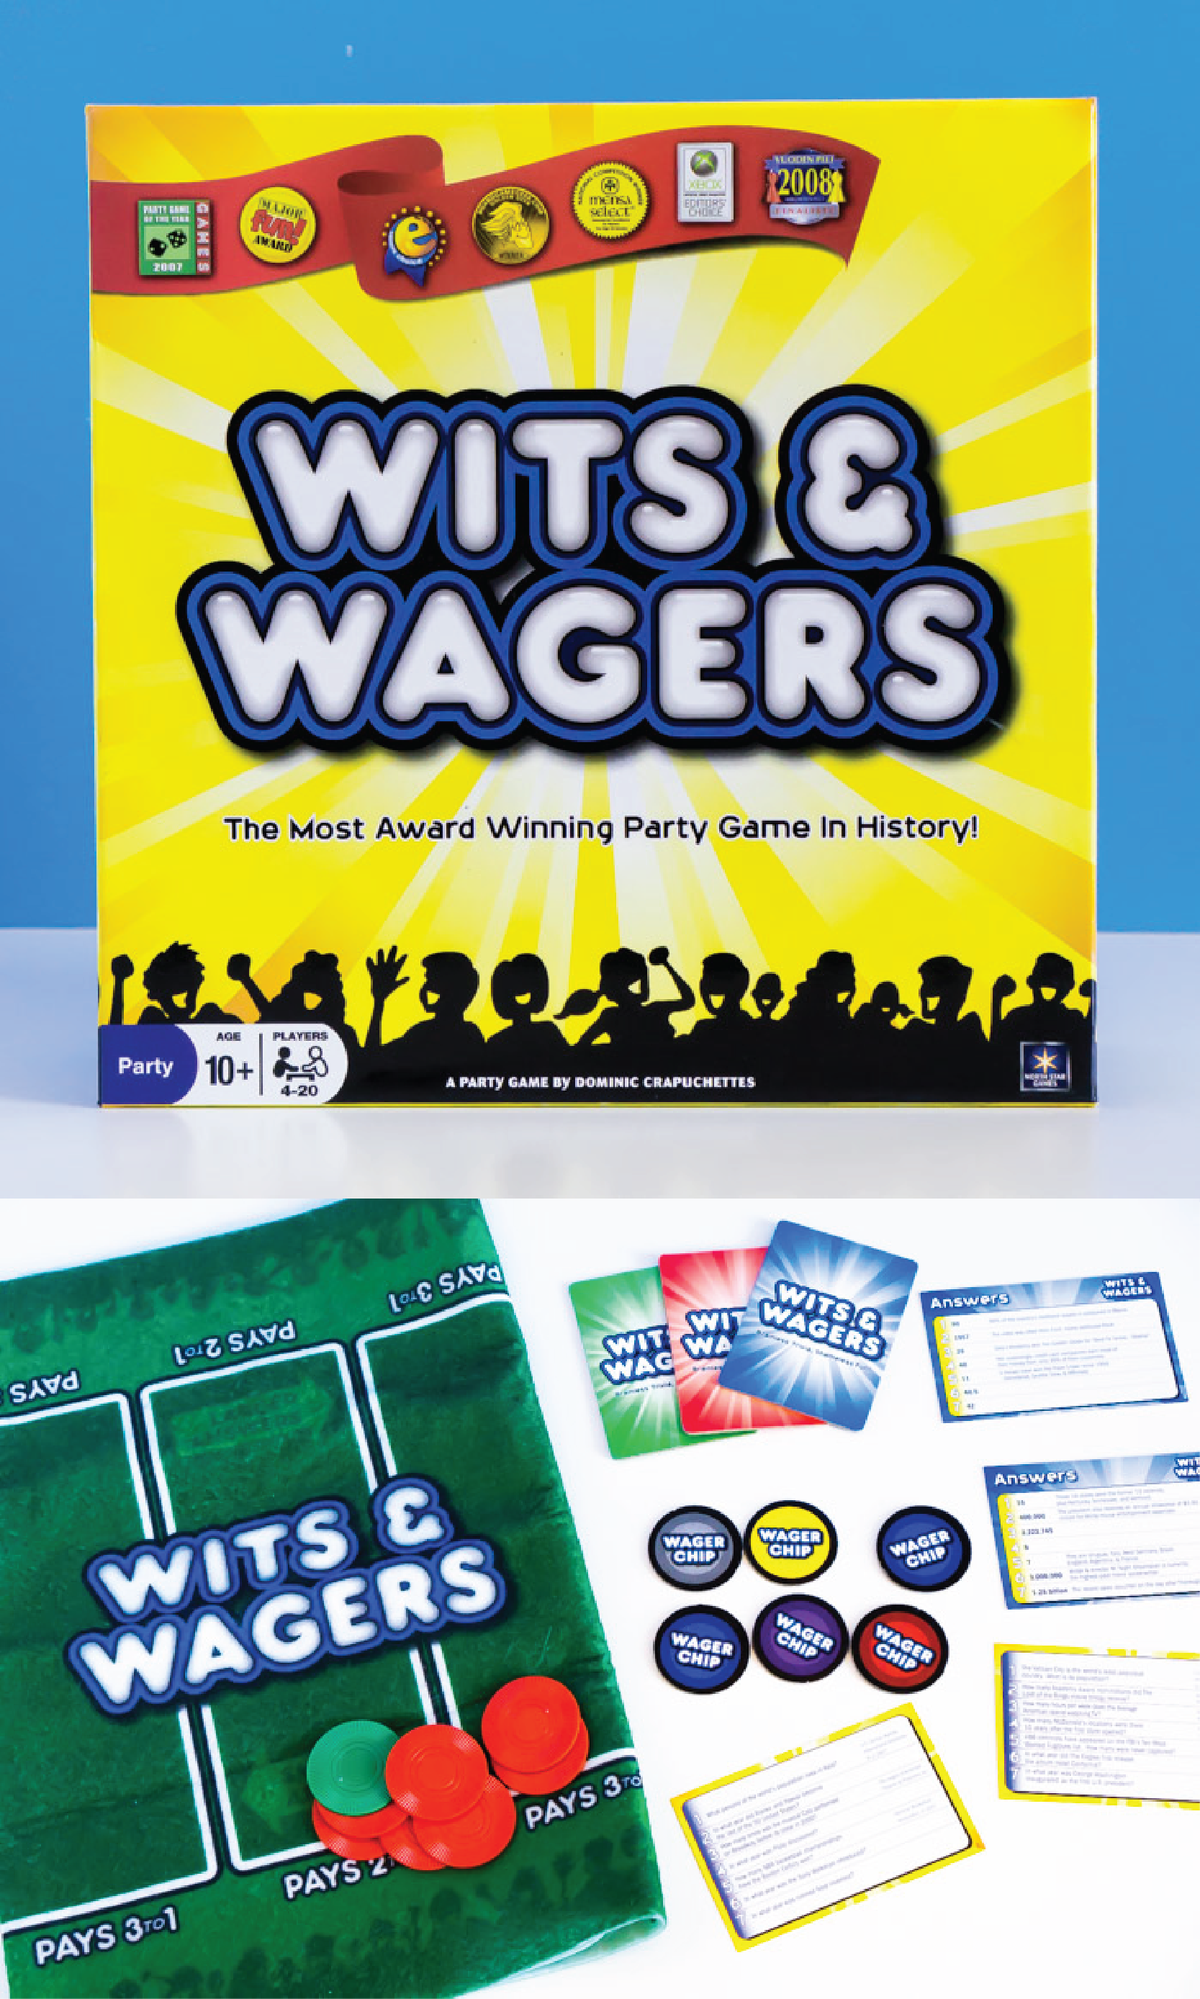 Wits and Wagers הוא אחד ממשחקי הלוח המסוכנים יותר למבוגרים